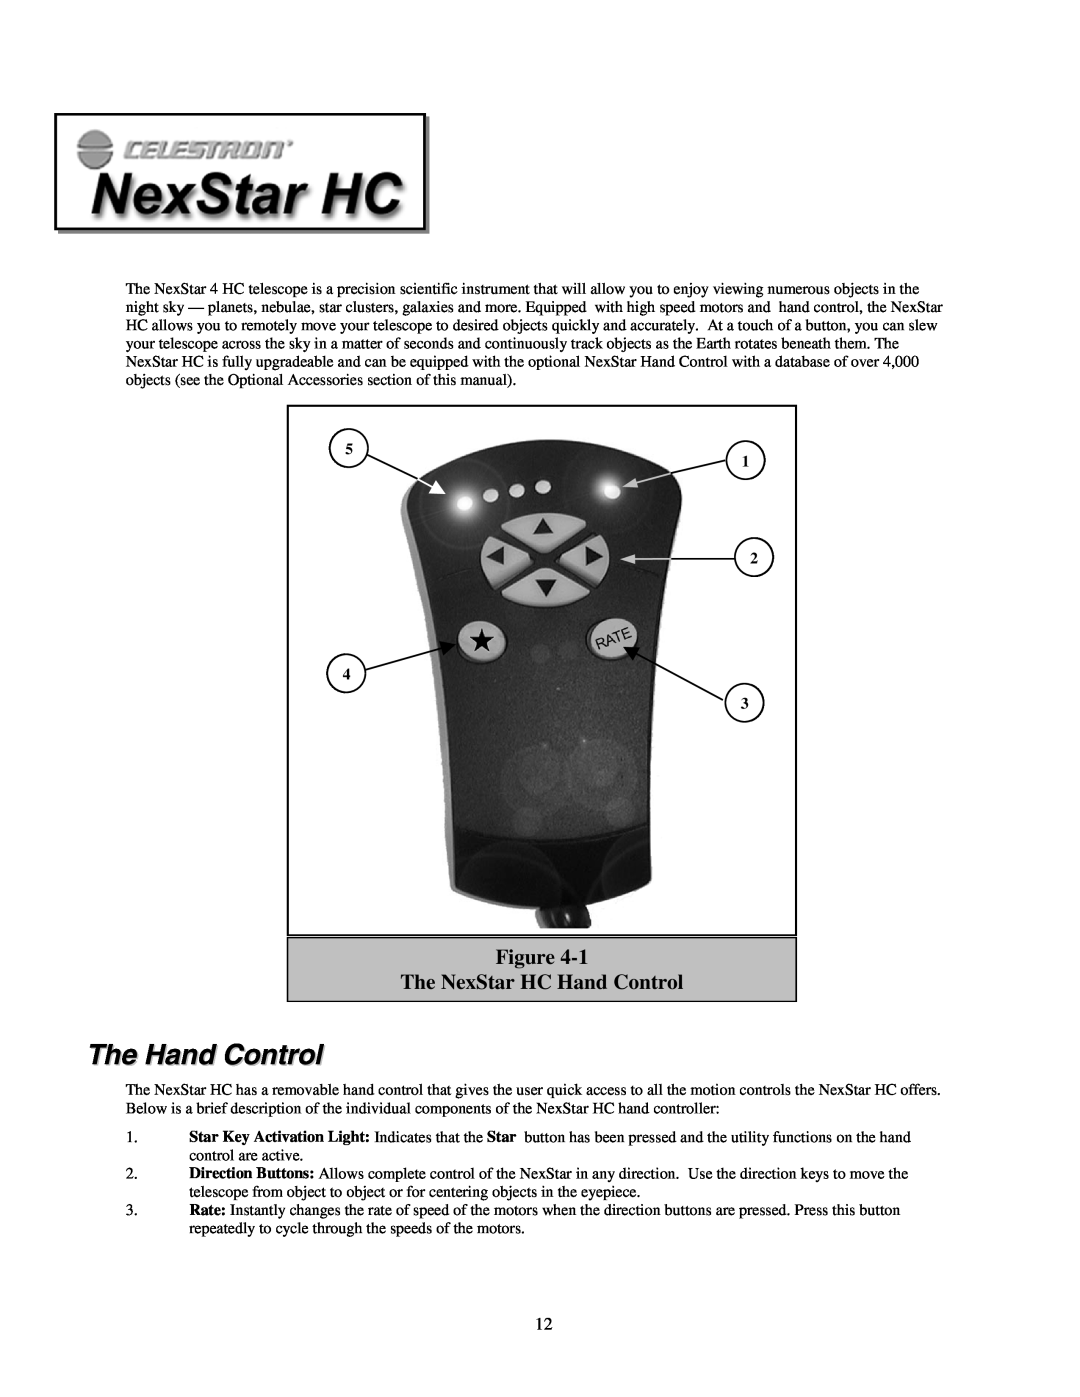 Celestron manual The Hand Control, Figure The NexStar HC Hand Control, 5 1 2 4 3 